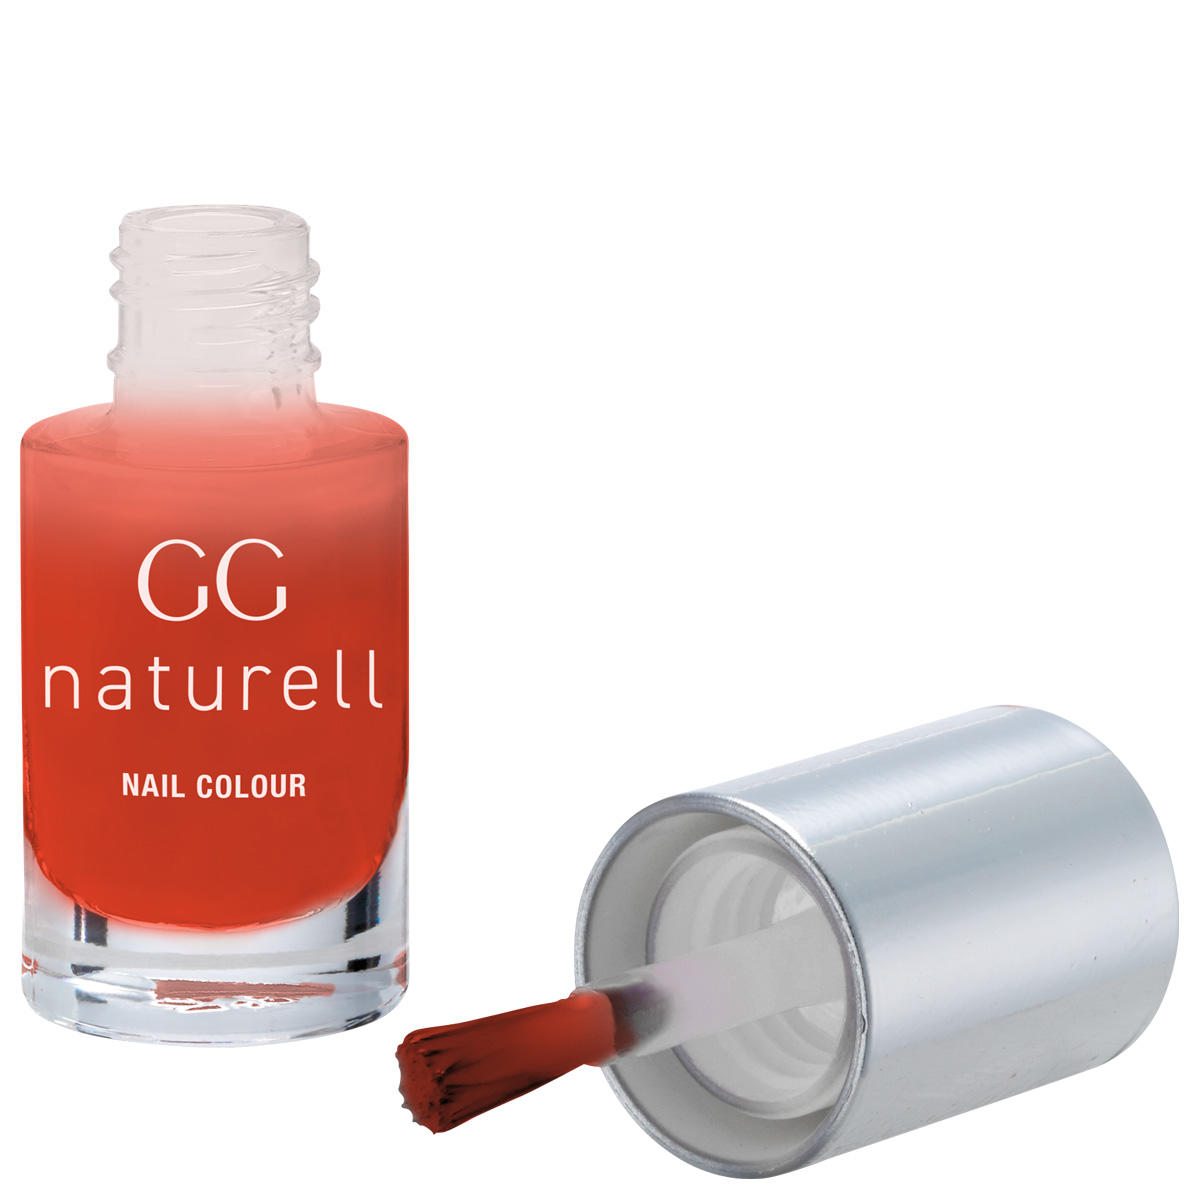 GERTRAUD GRUBER GG naturell Nail Colour  85 Koralle 5 ml - 1